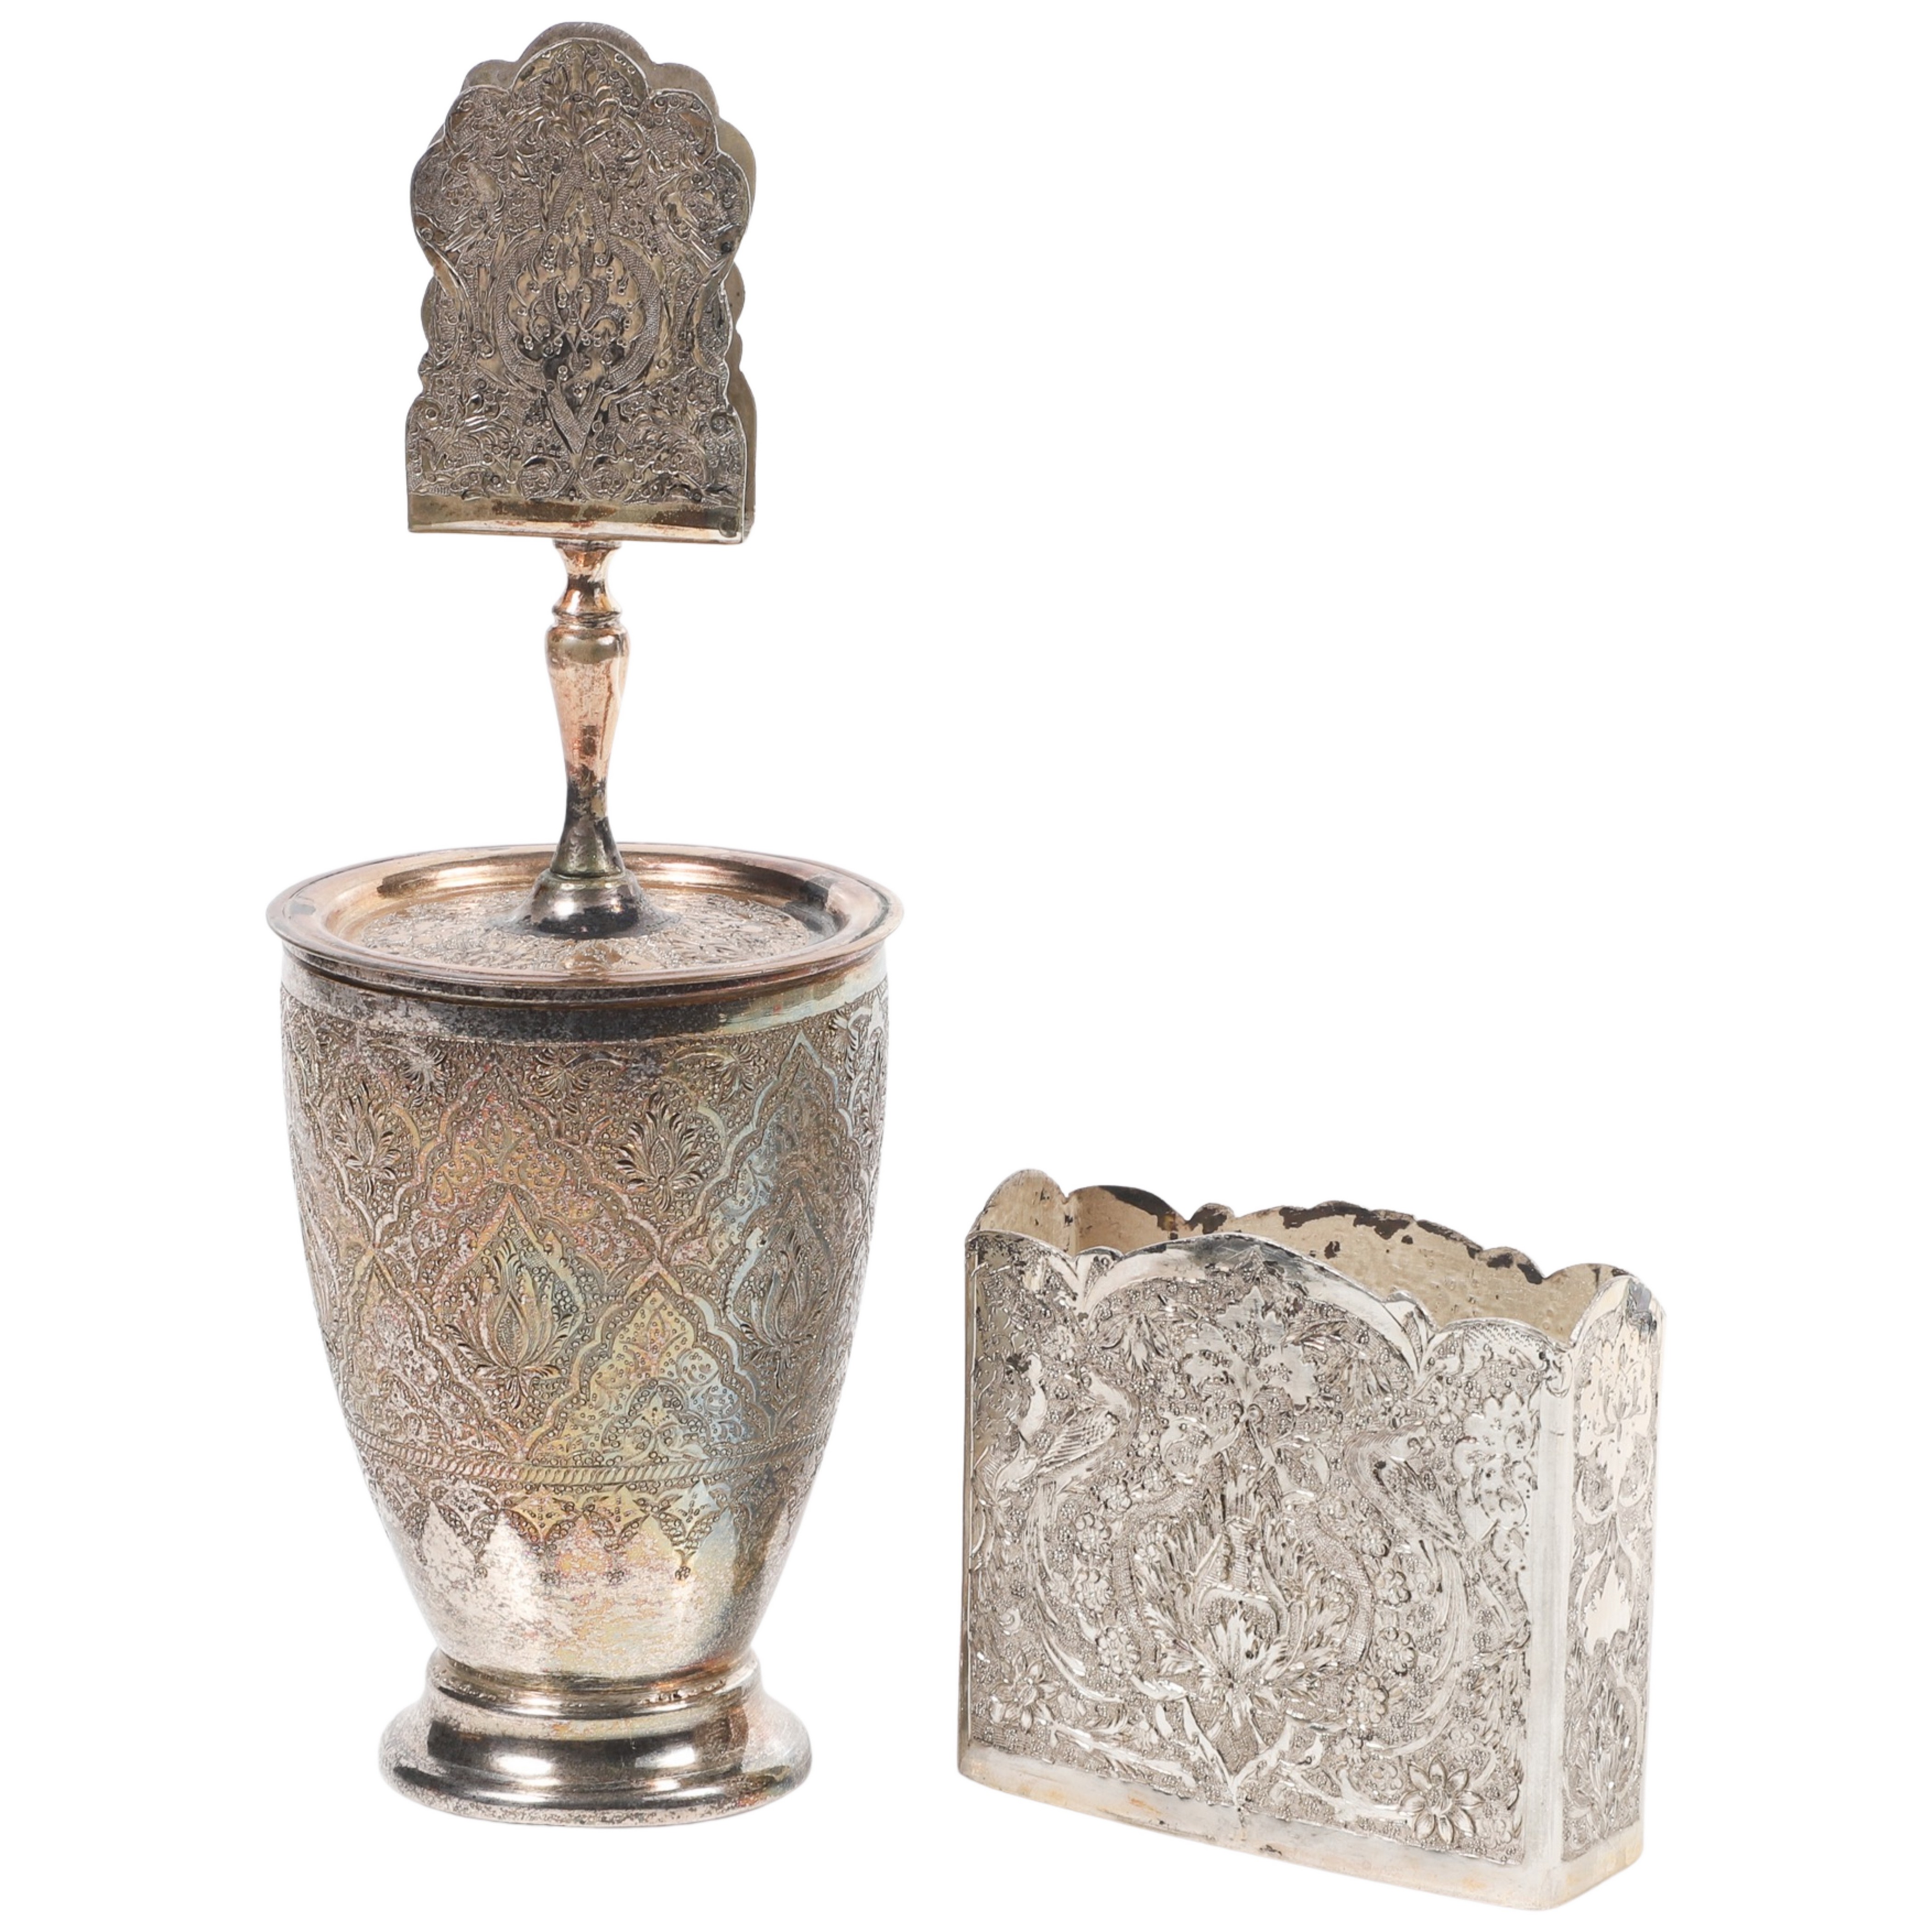 Persian silver smoking accessories 3b44cc